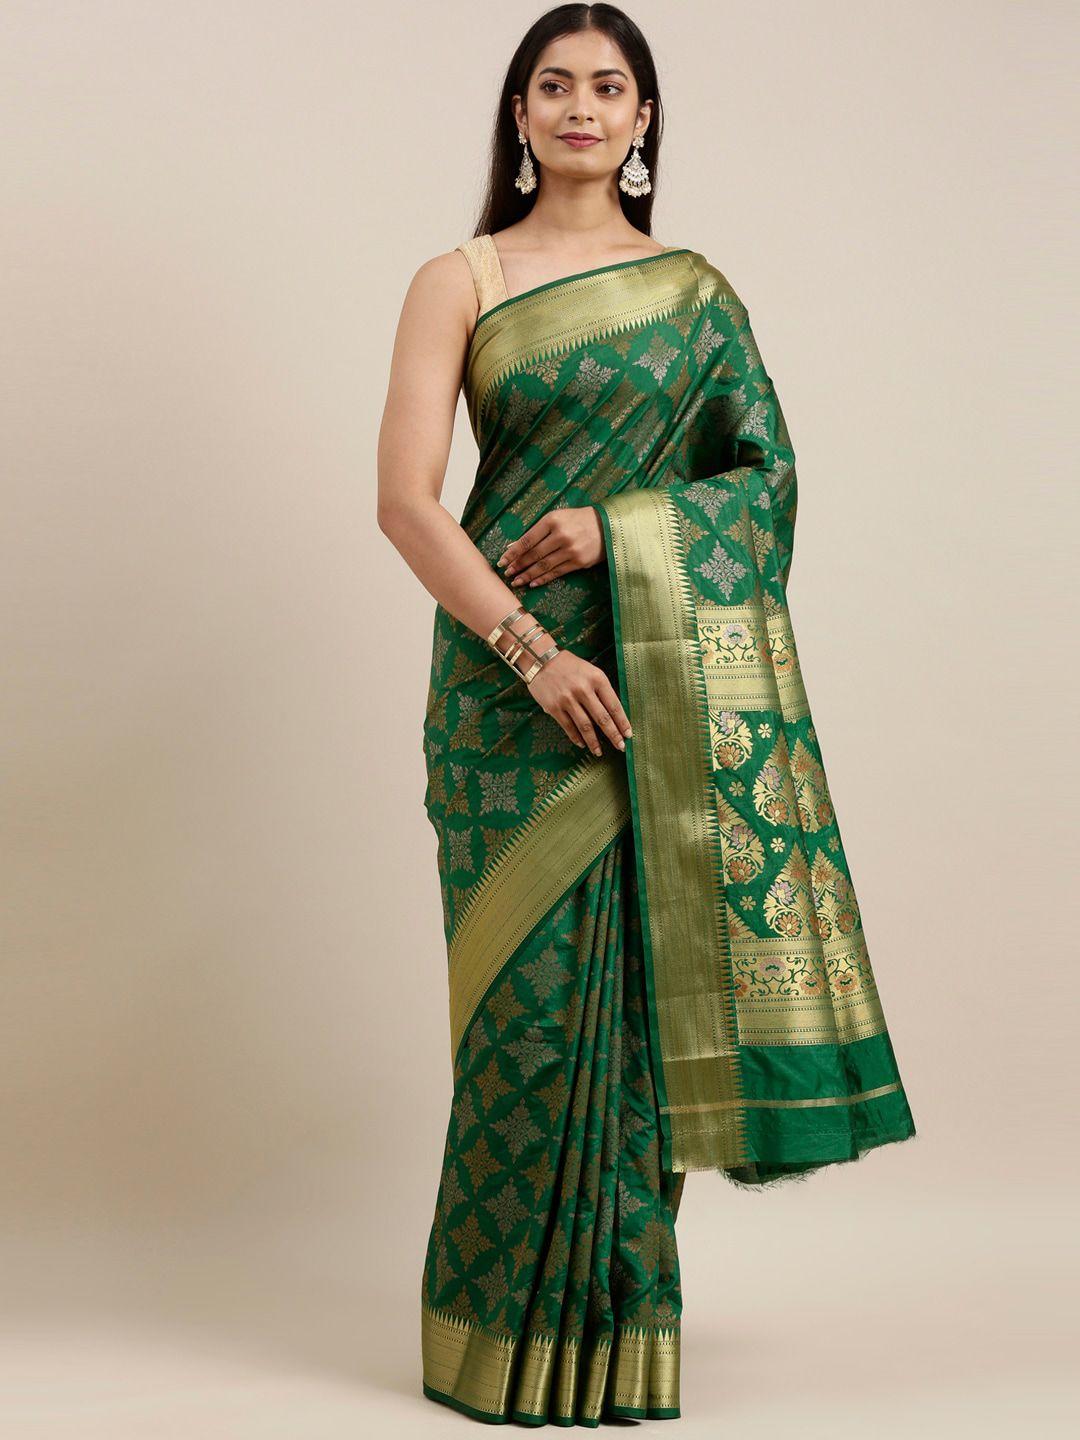 the chennai silks green & gold-toned ethnic motifs saree